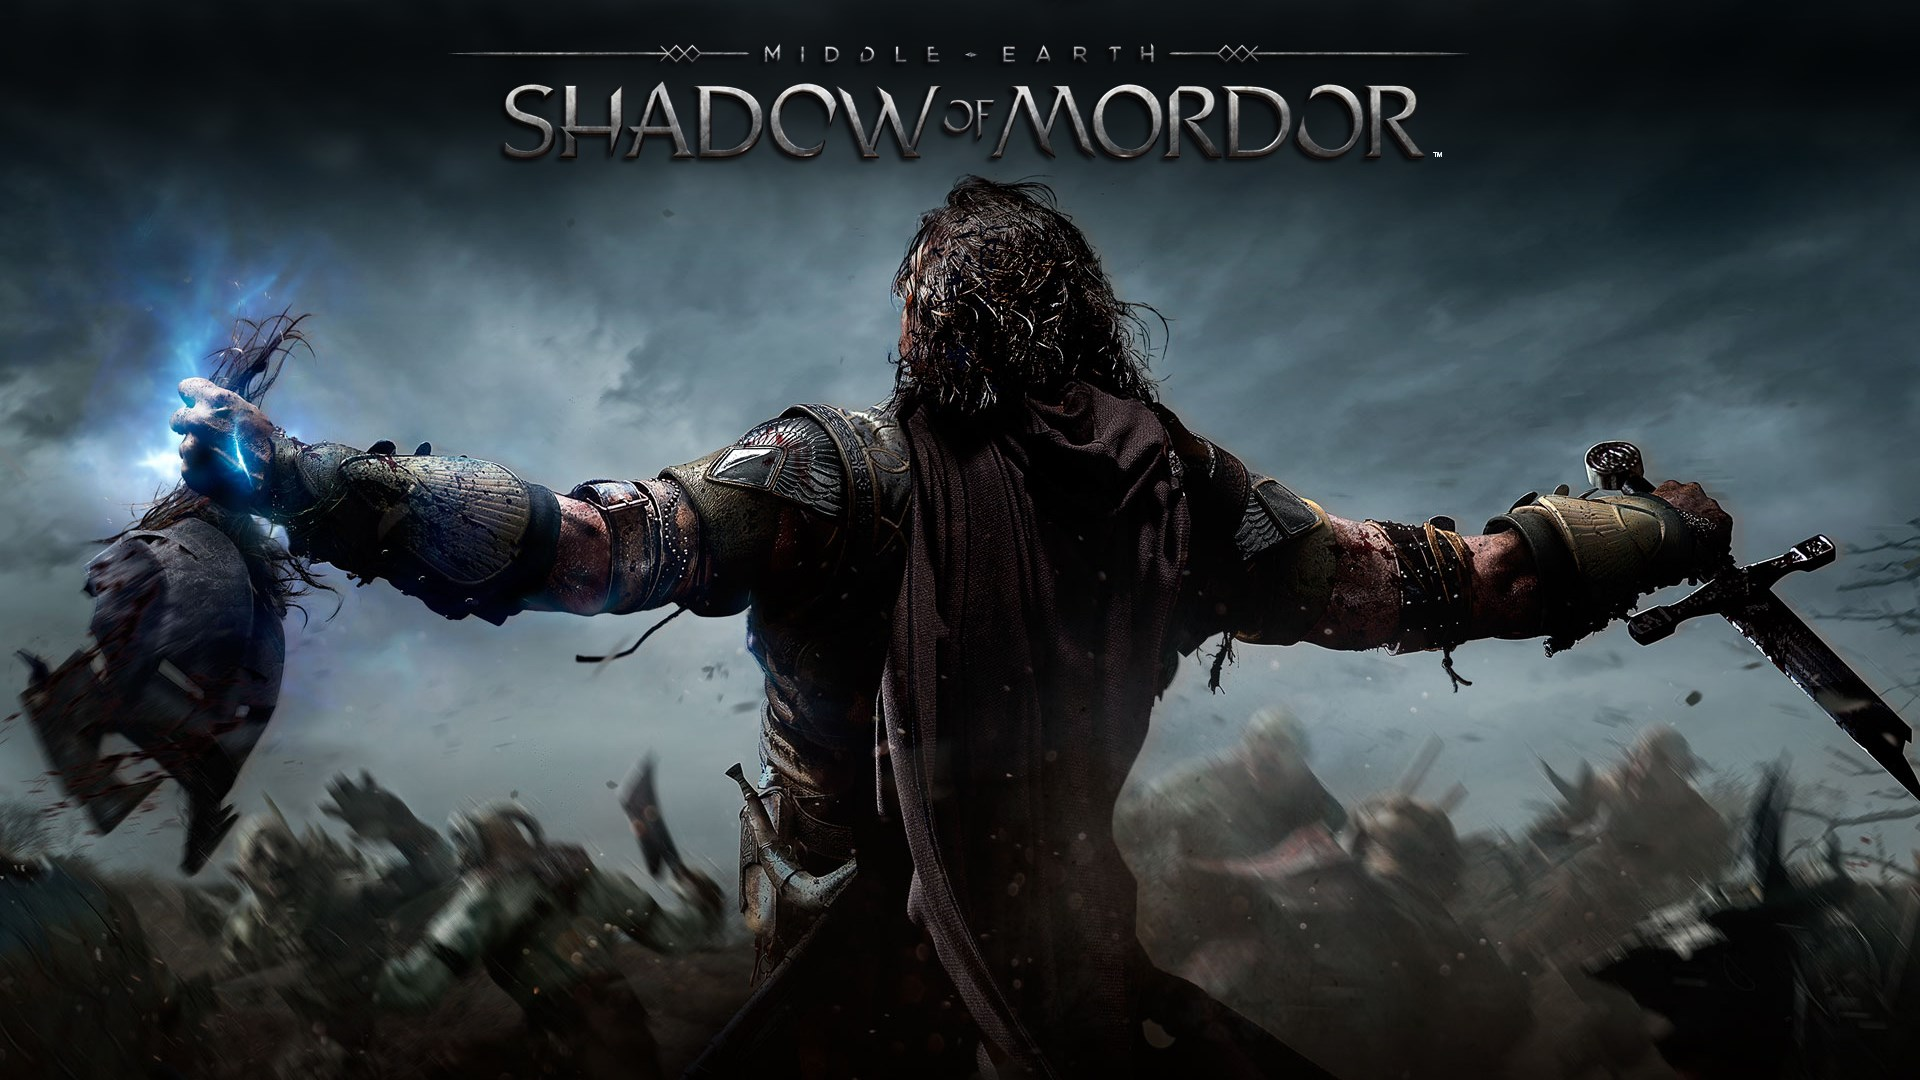 Nom Nom Nom! achievement in Middle-earth: Shadow of Mordor